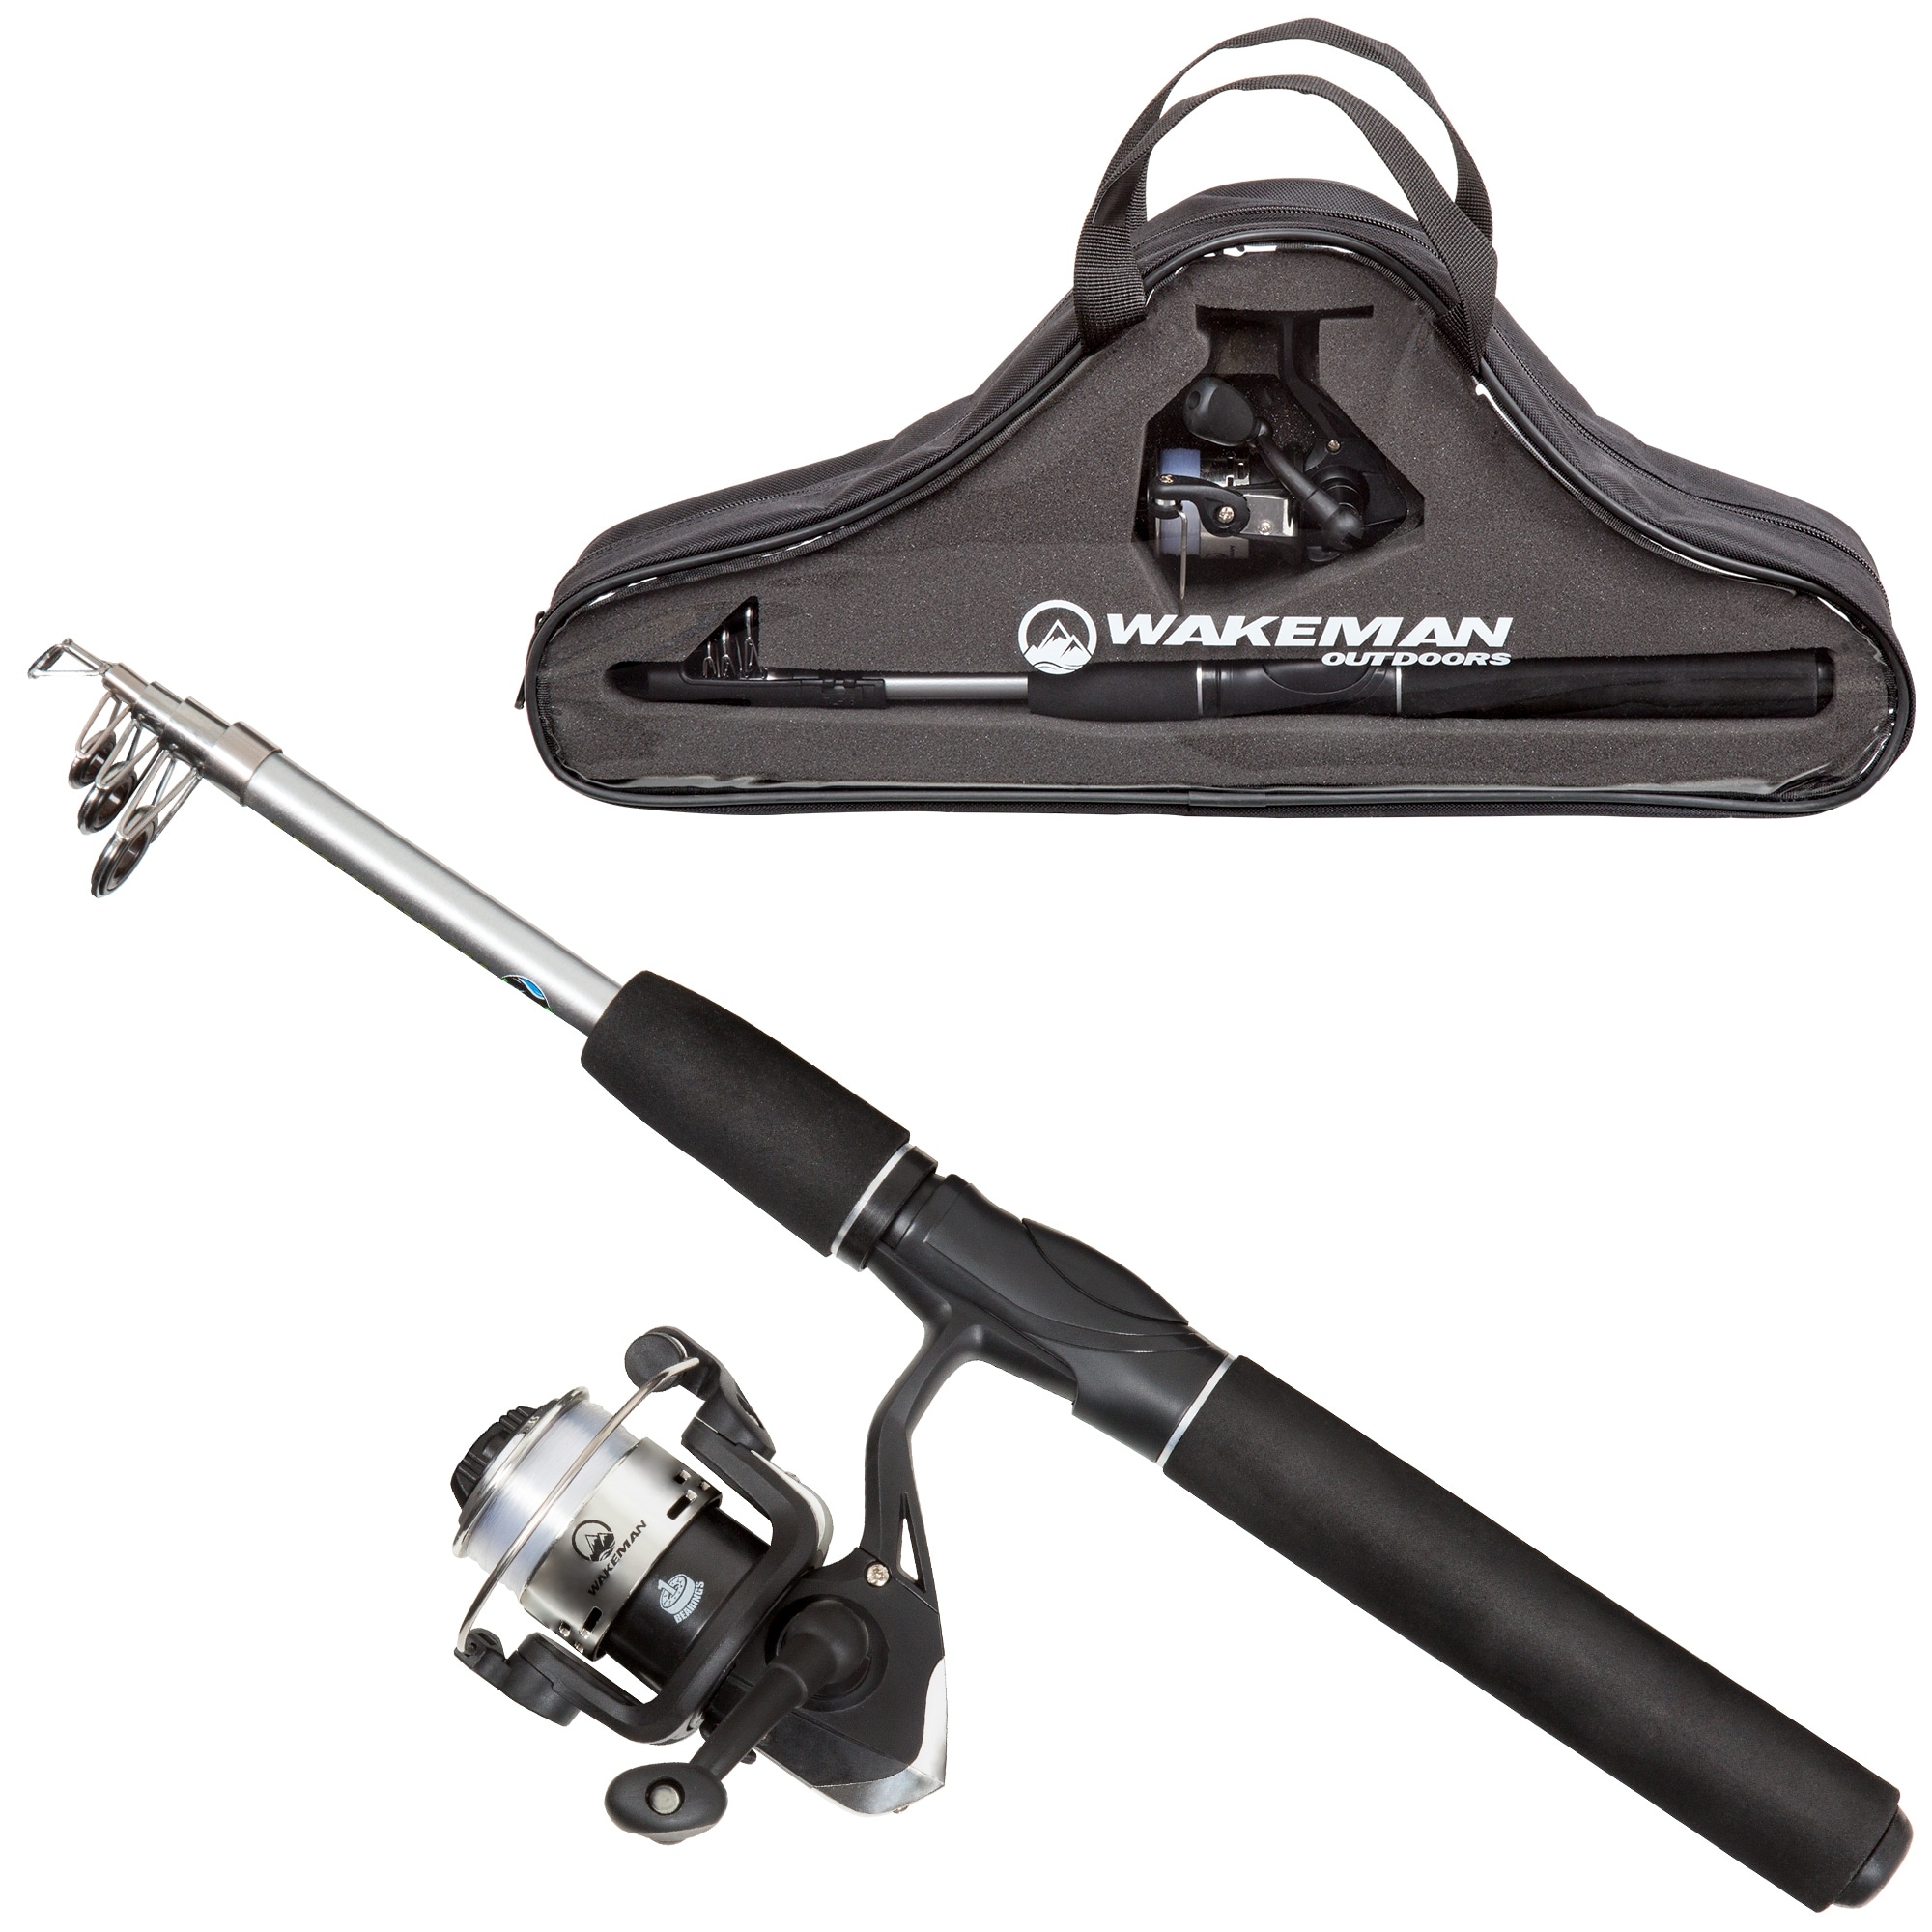 Fiberglass Fishing Rod - Portable Telescopic Pole with Size 20 Spinning Reel by Wakeman (Black) - Black - 65